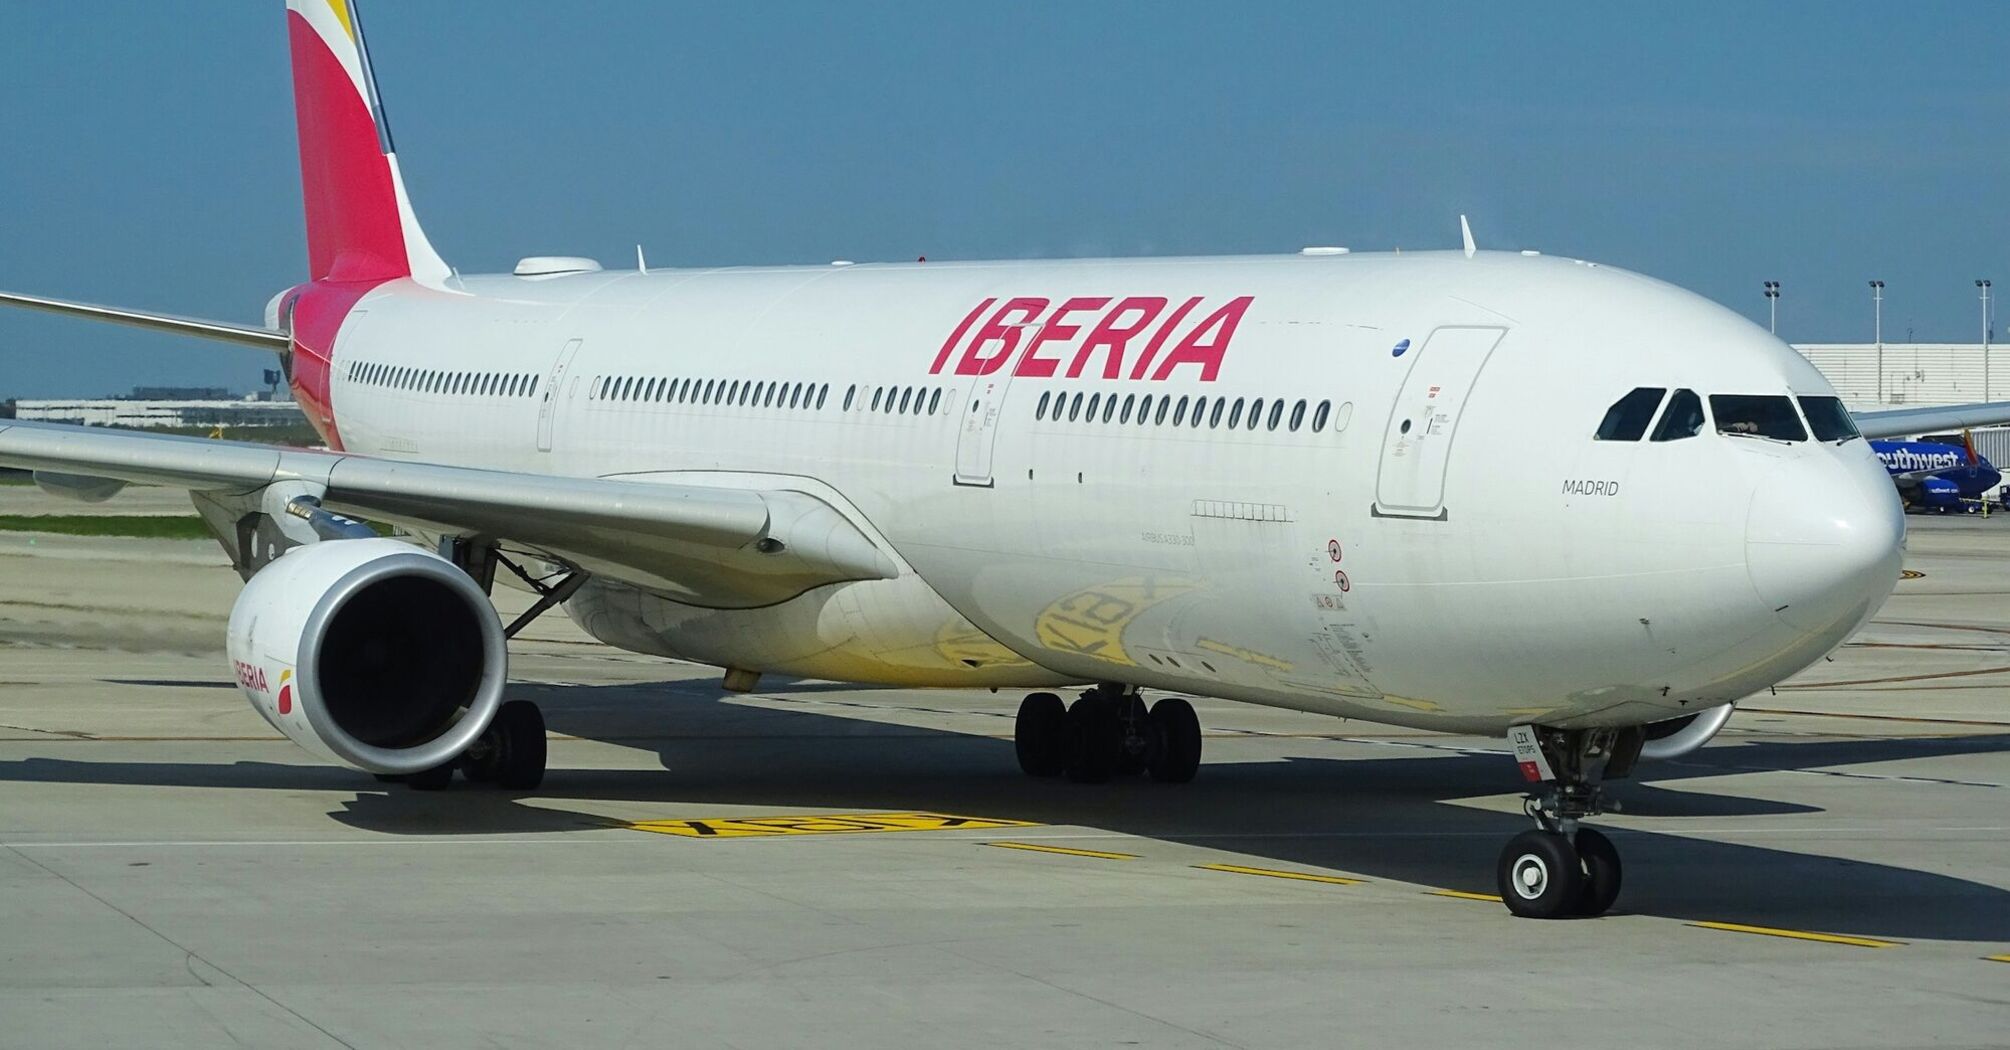 Iberia airplane on the runway